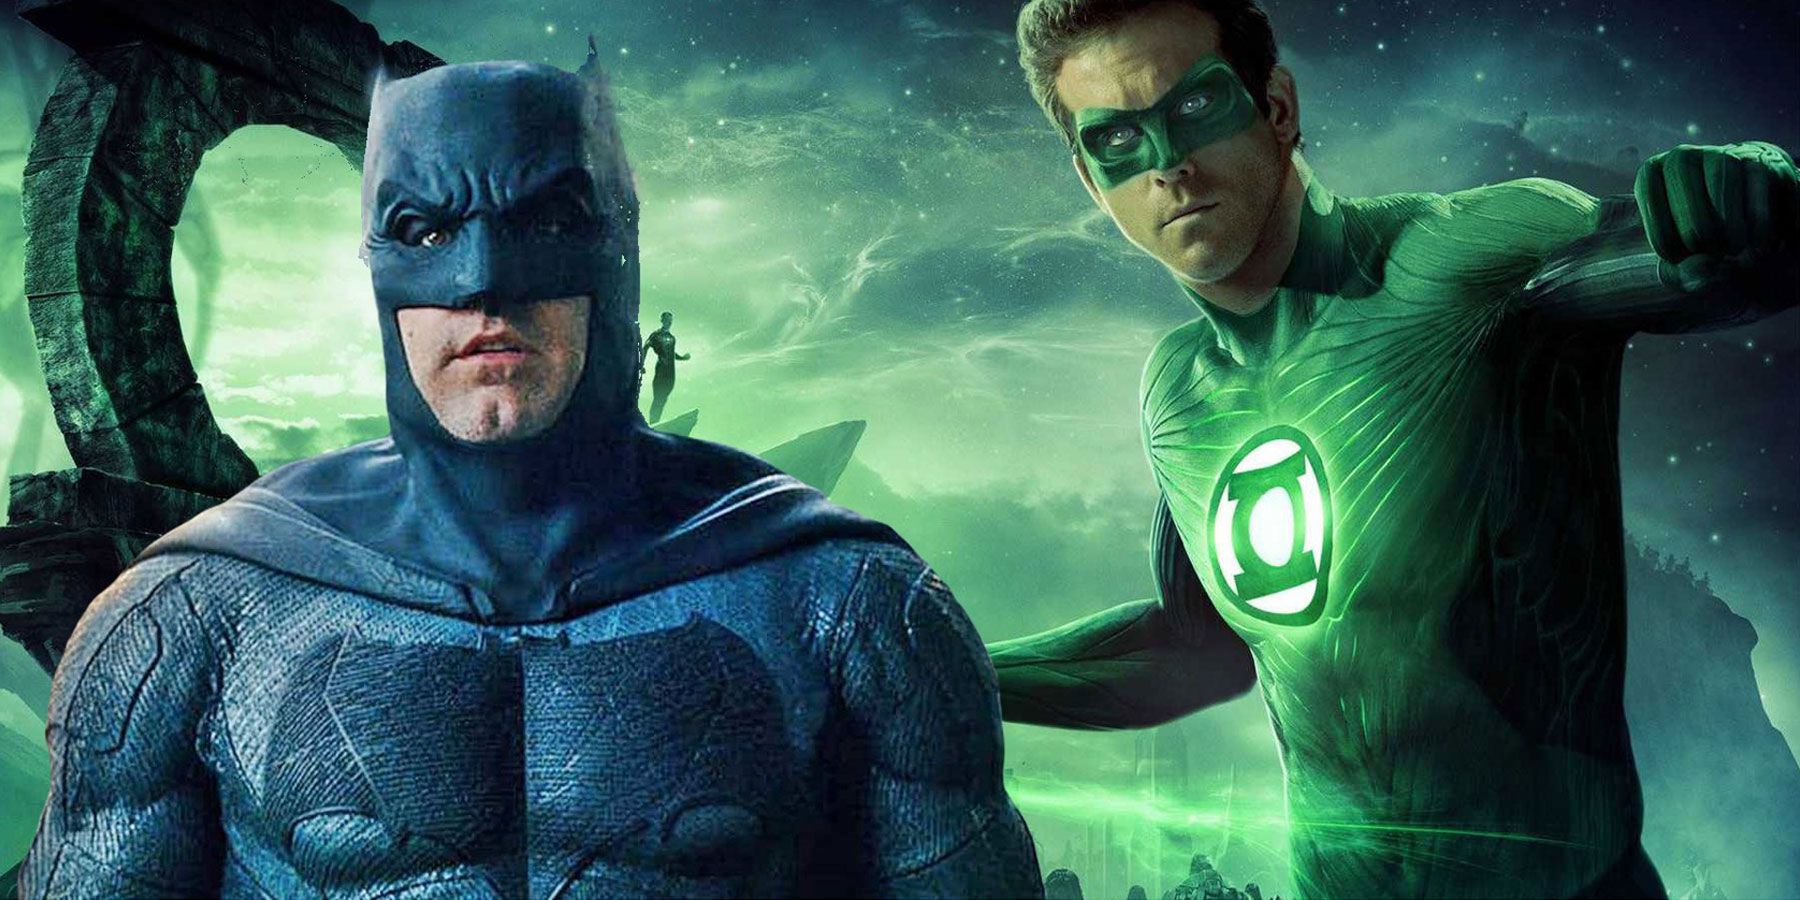 Ryan Reynolds as Green Lantern and Ben Affleck as Batman